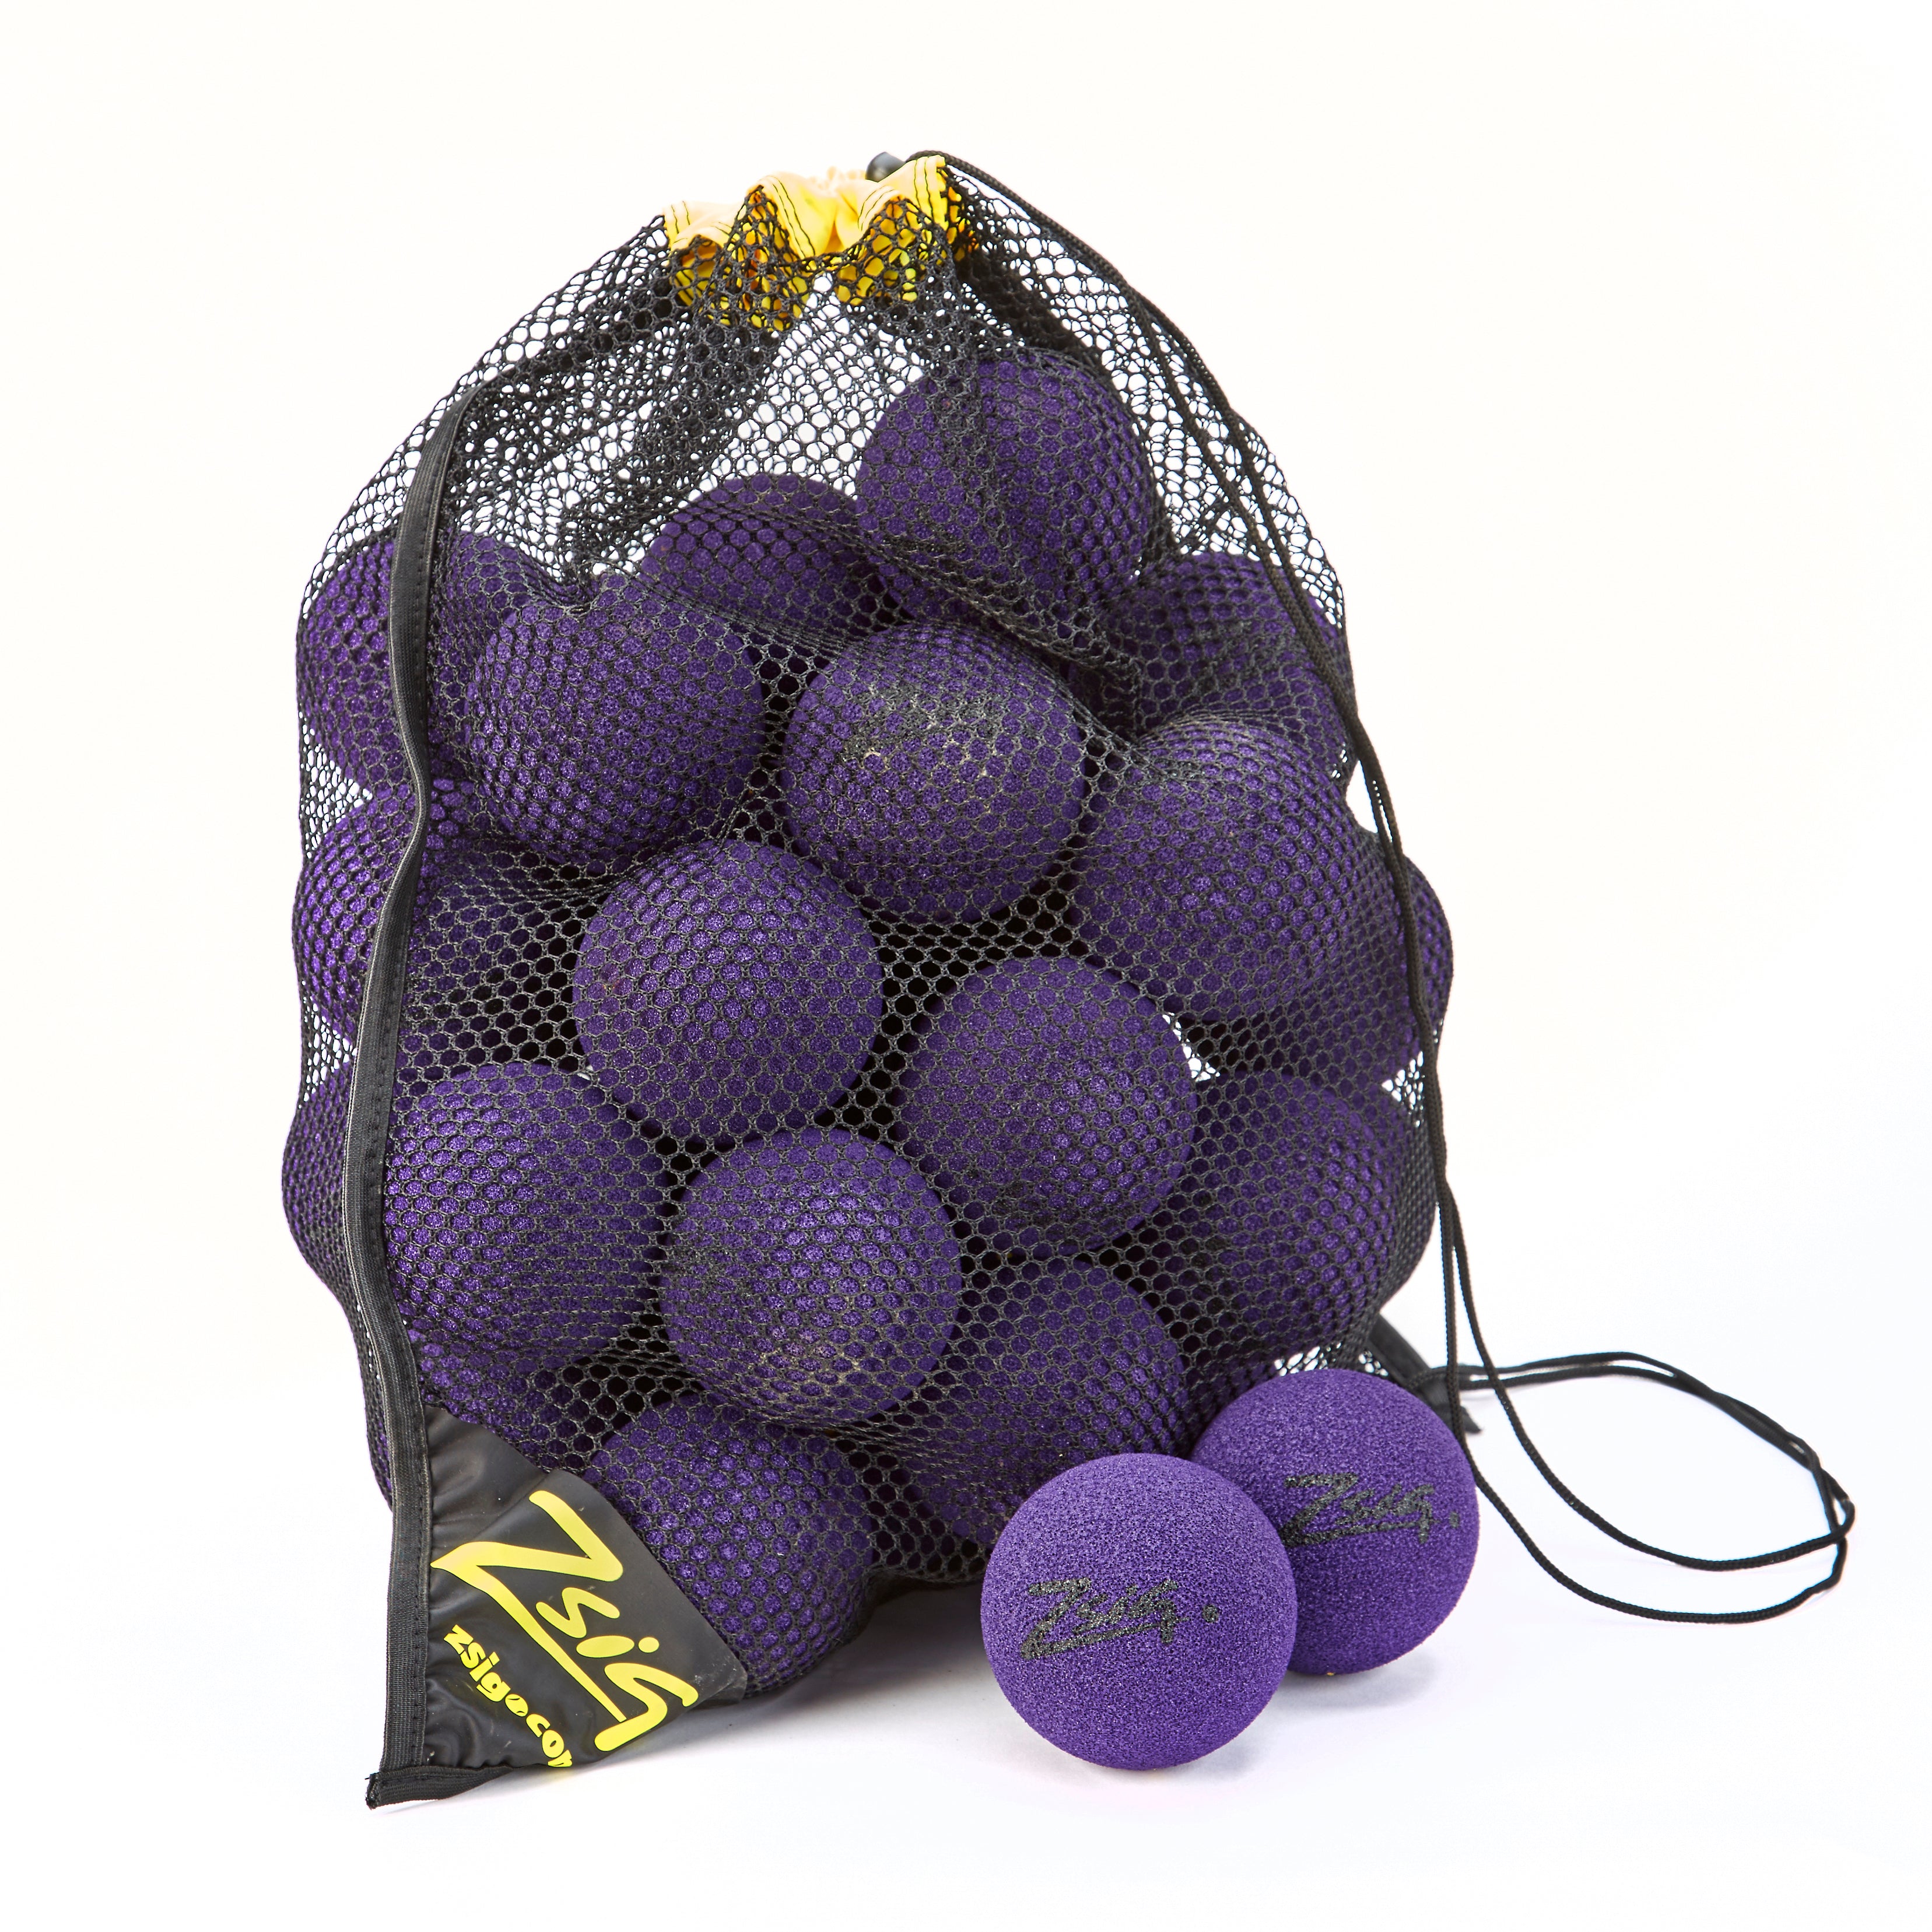 Zsig MP9 Tough Guy Bag of 48 9cm balls in Purple